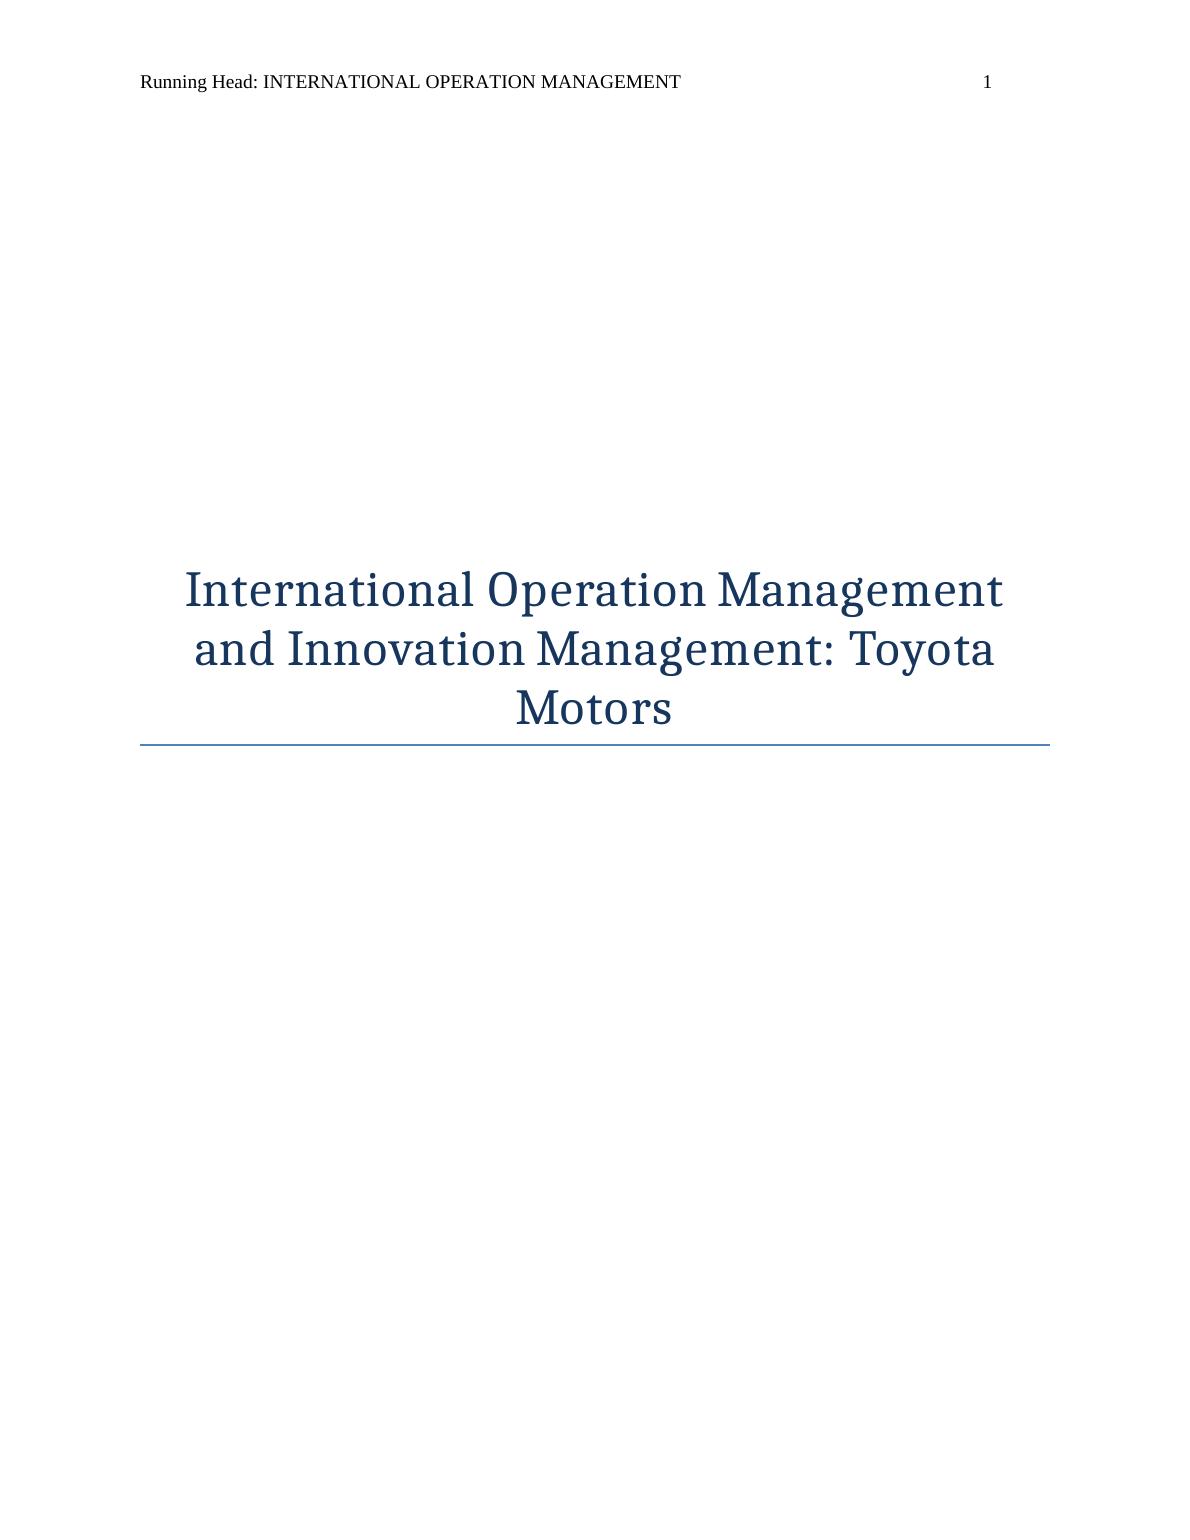 International Operations Management PDF_1